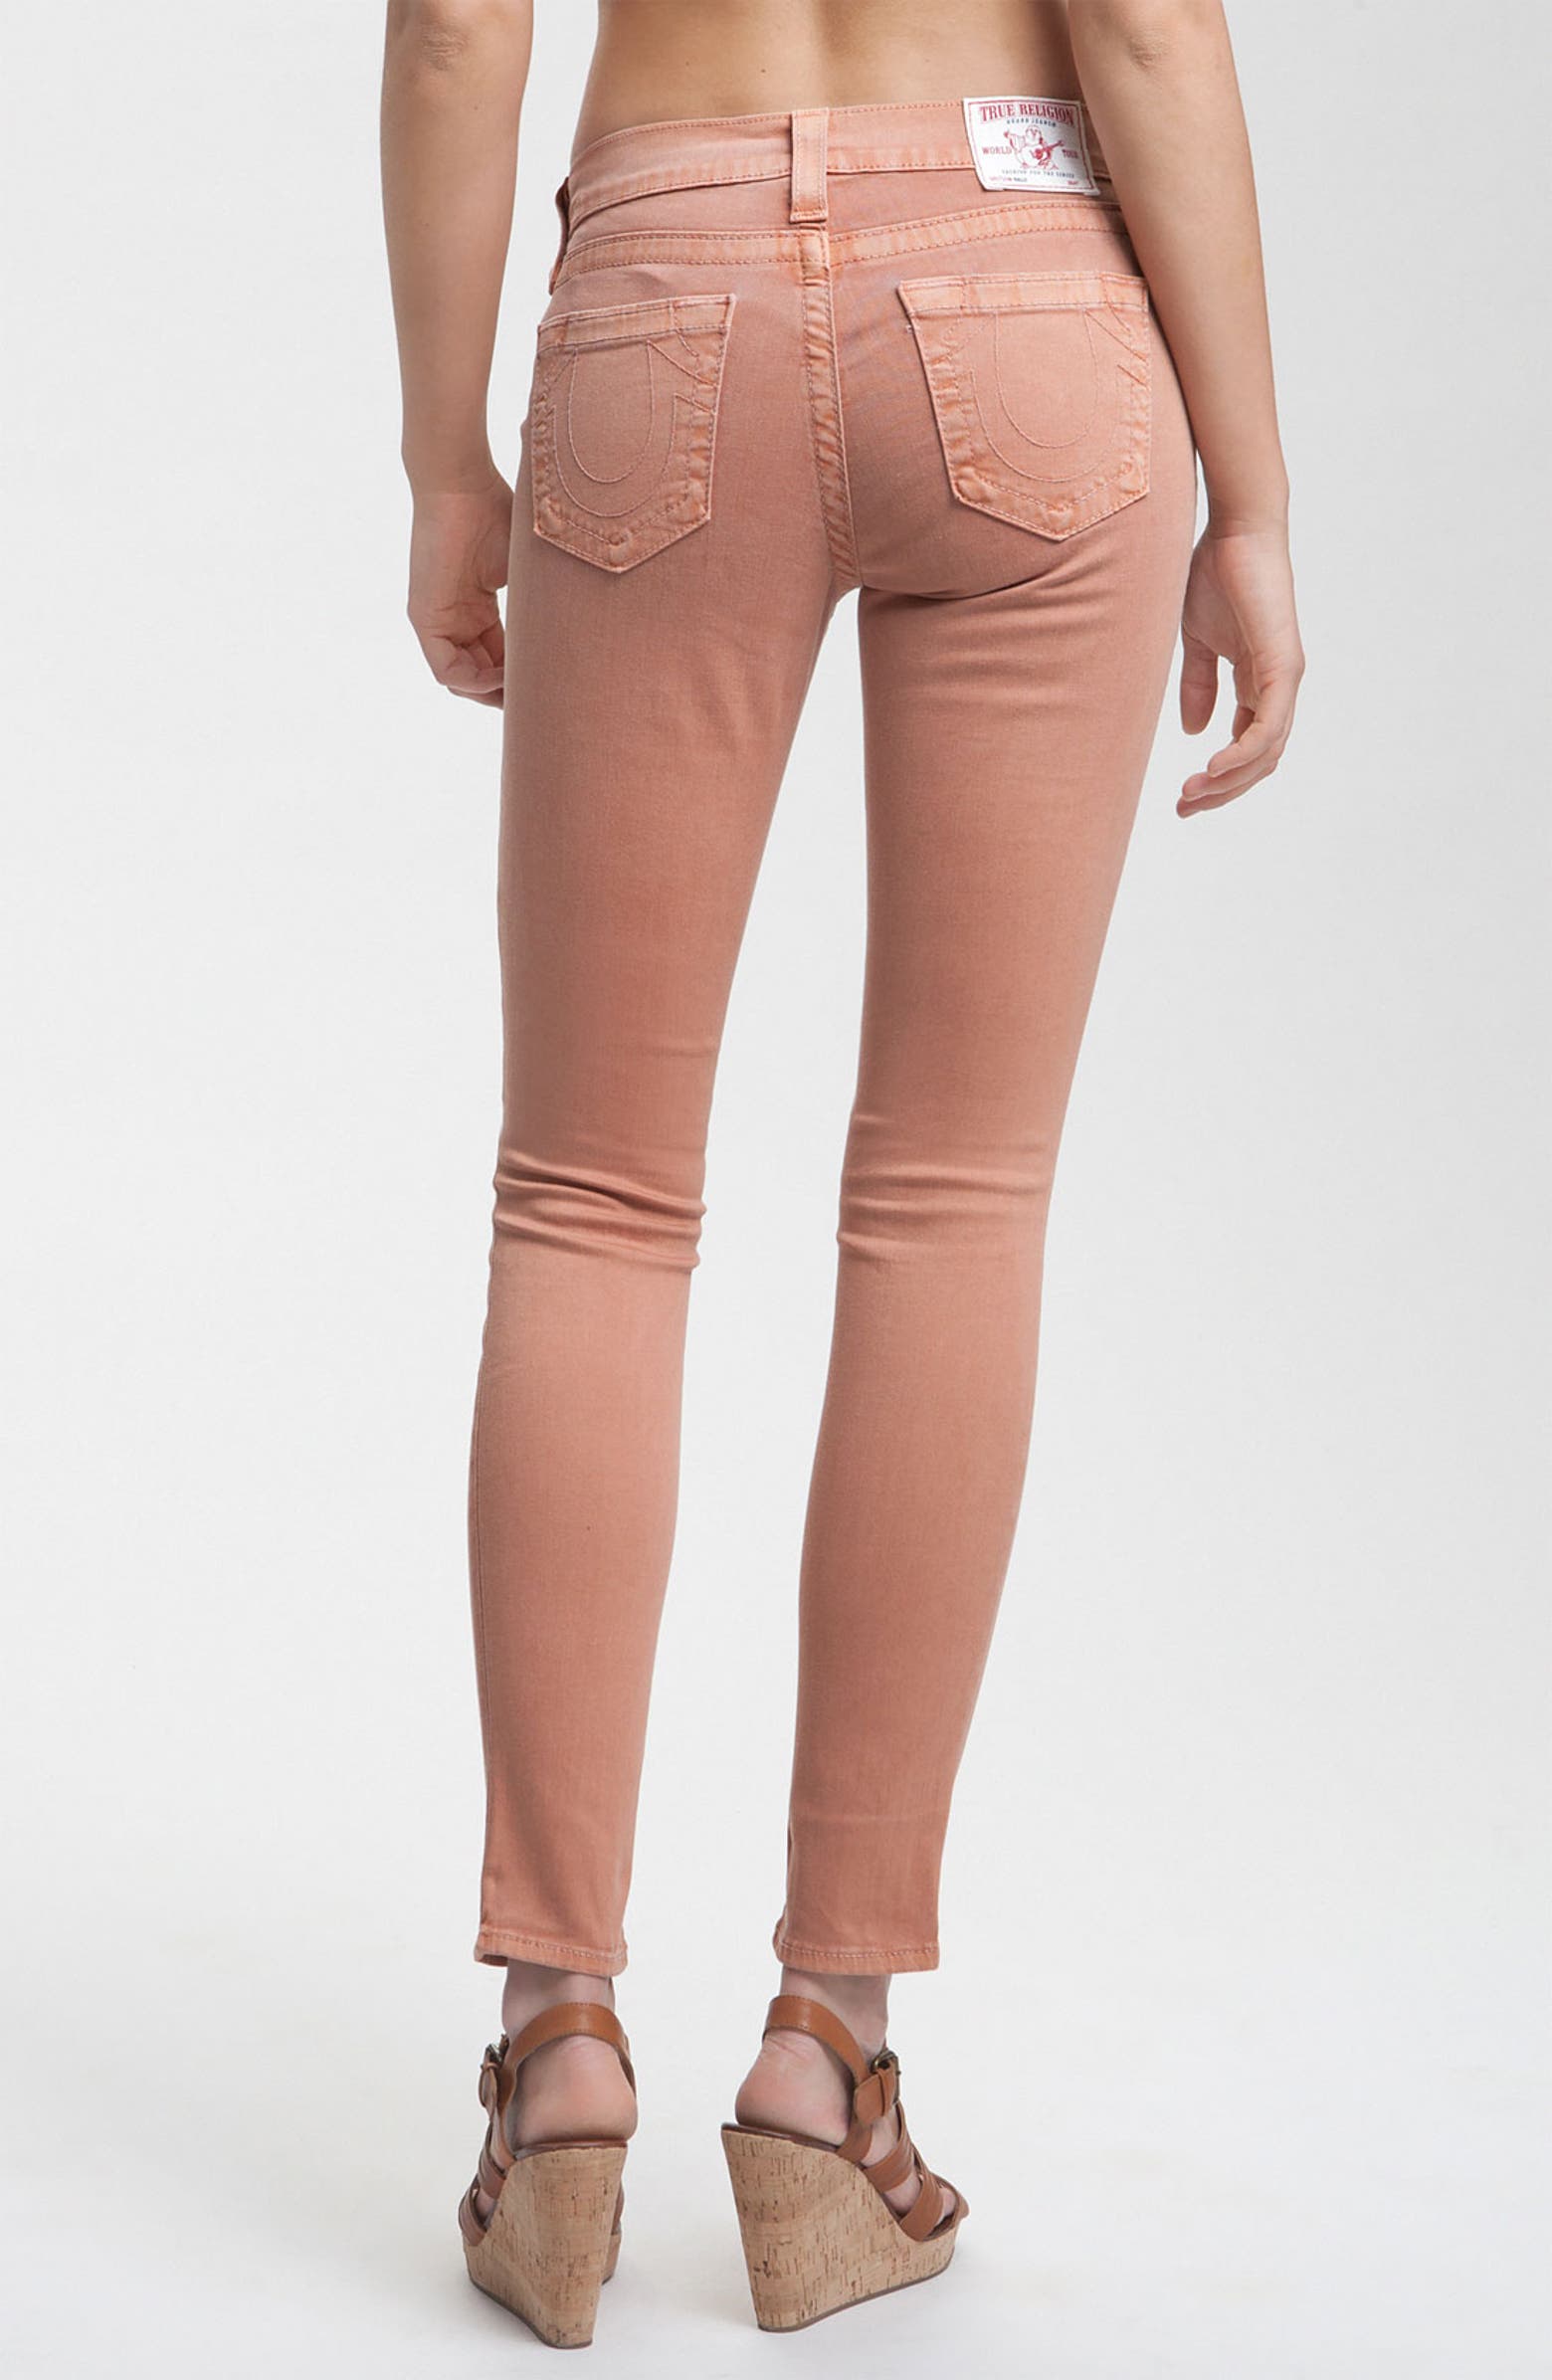 True Religion Brand Jeans 'Halle' Skinny Stretch Jeans (Coral) | Nordstrom